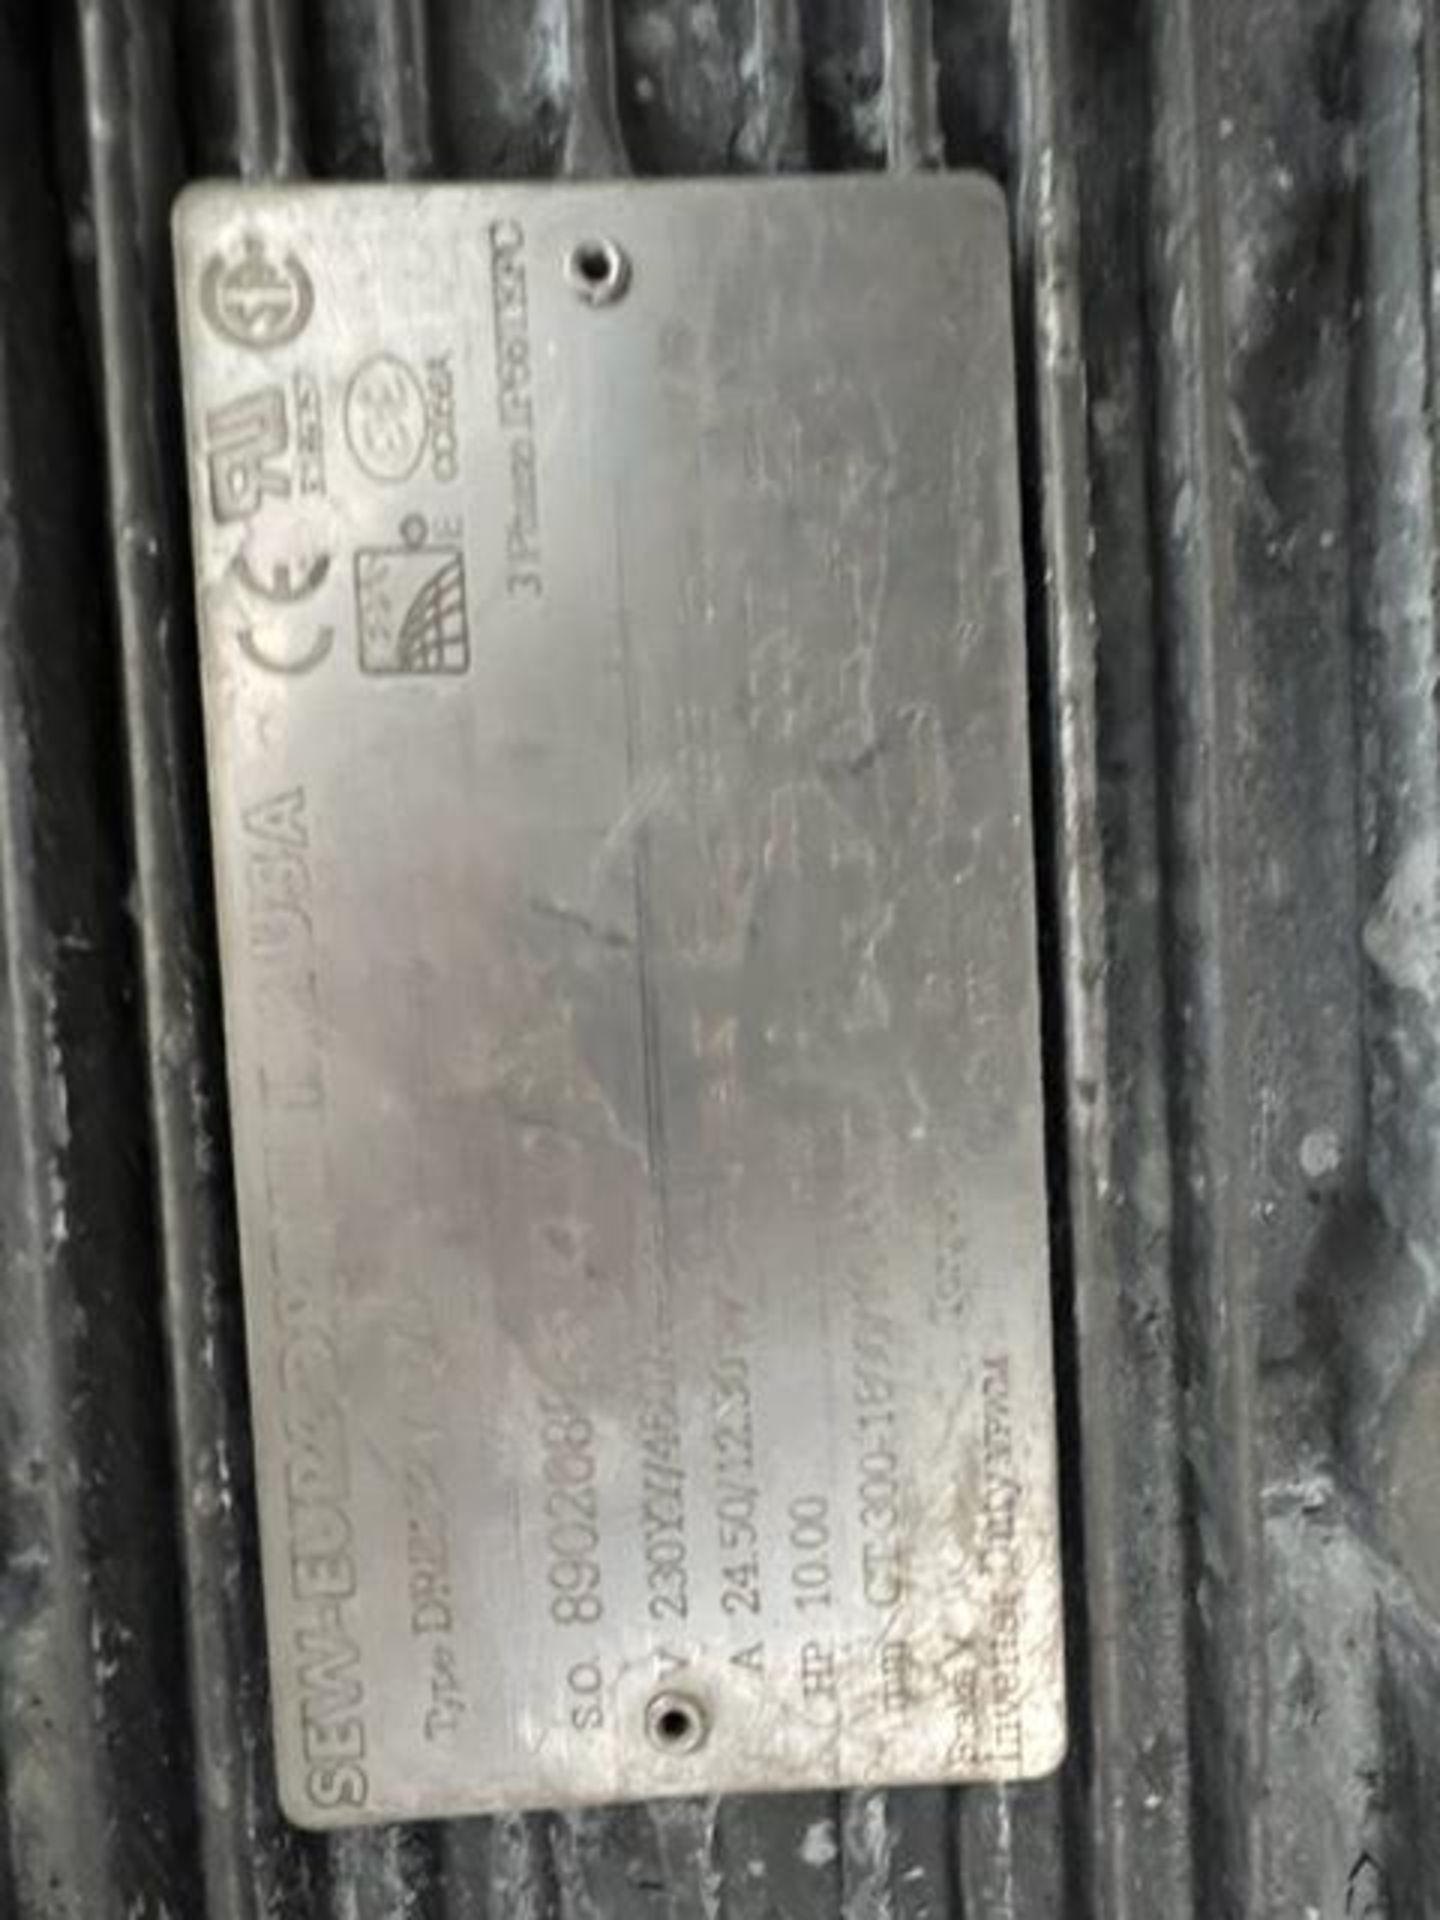 Asset 144 - Waukesha model 60 stainless steel positive displacement pump serial#4857, 3" diameter - Image 4 of 4